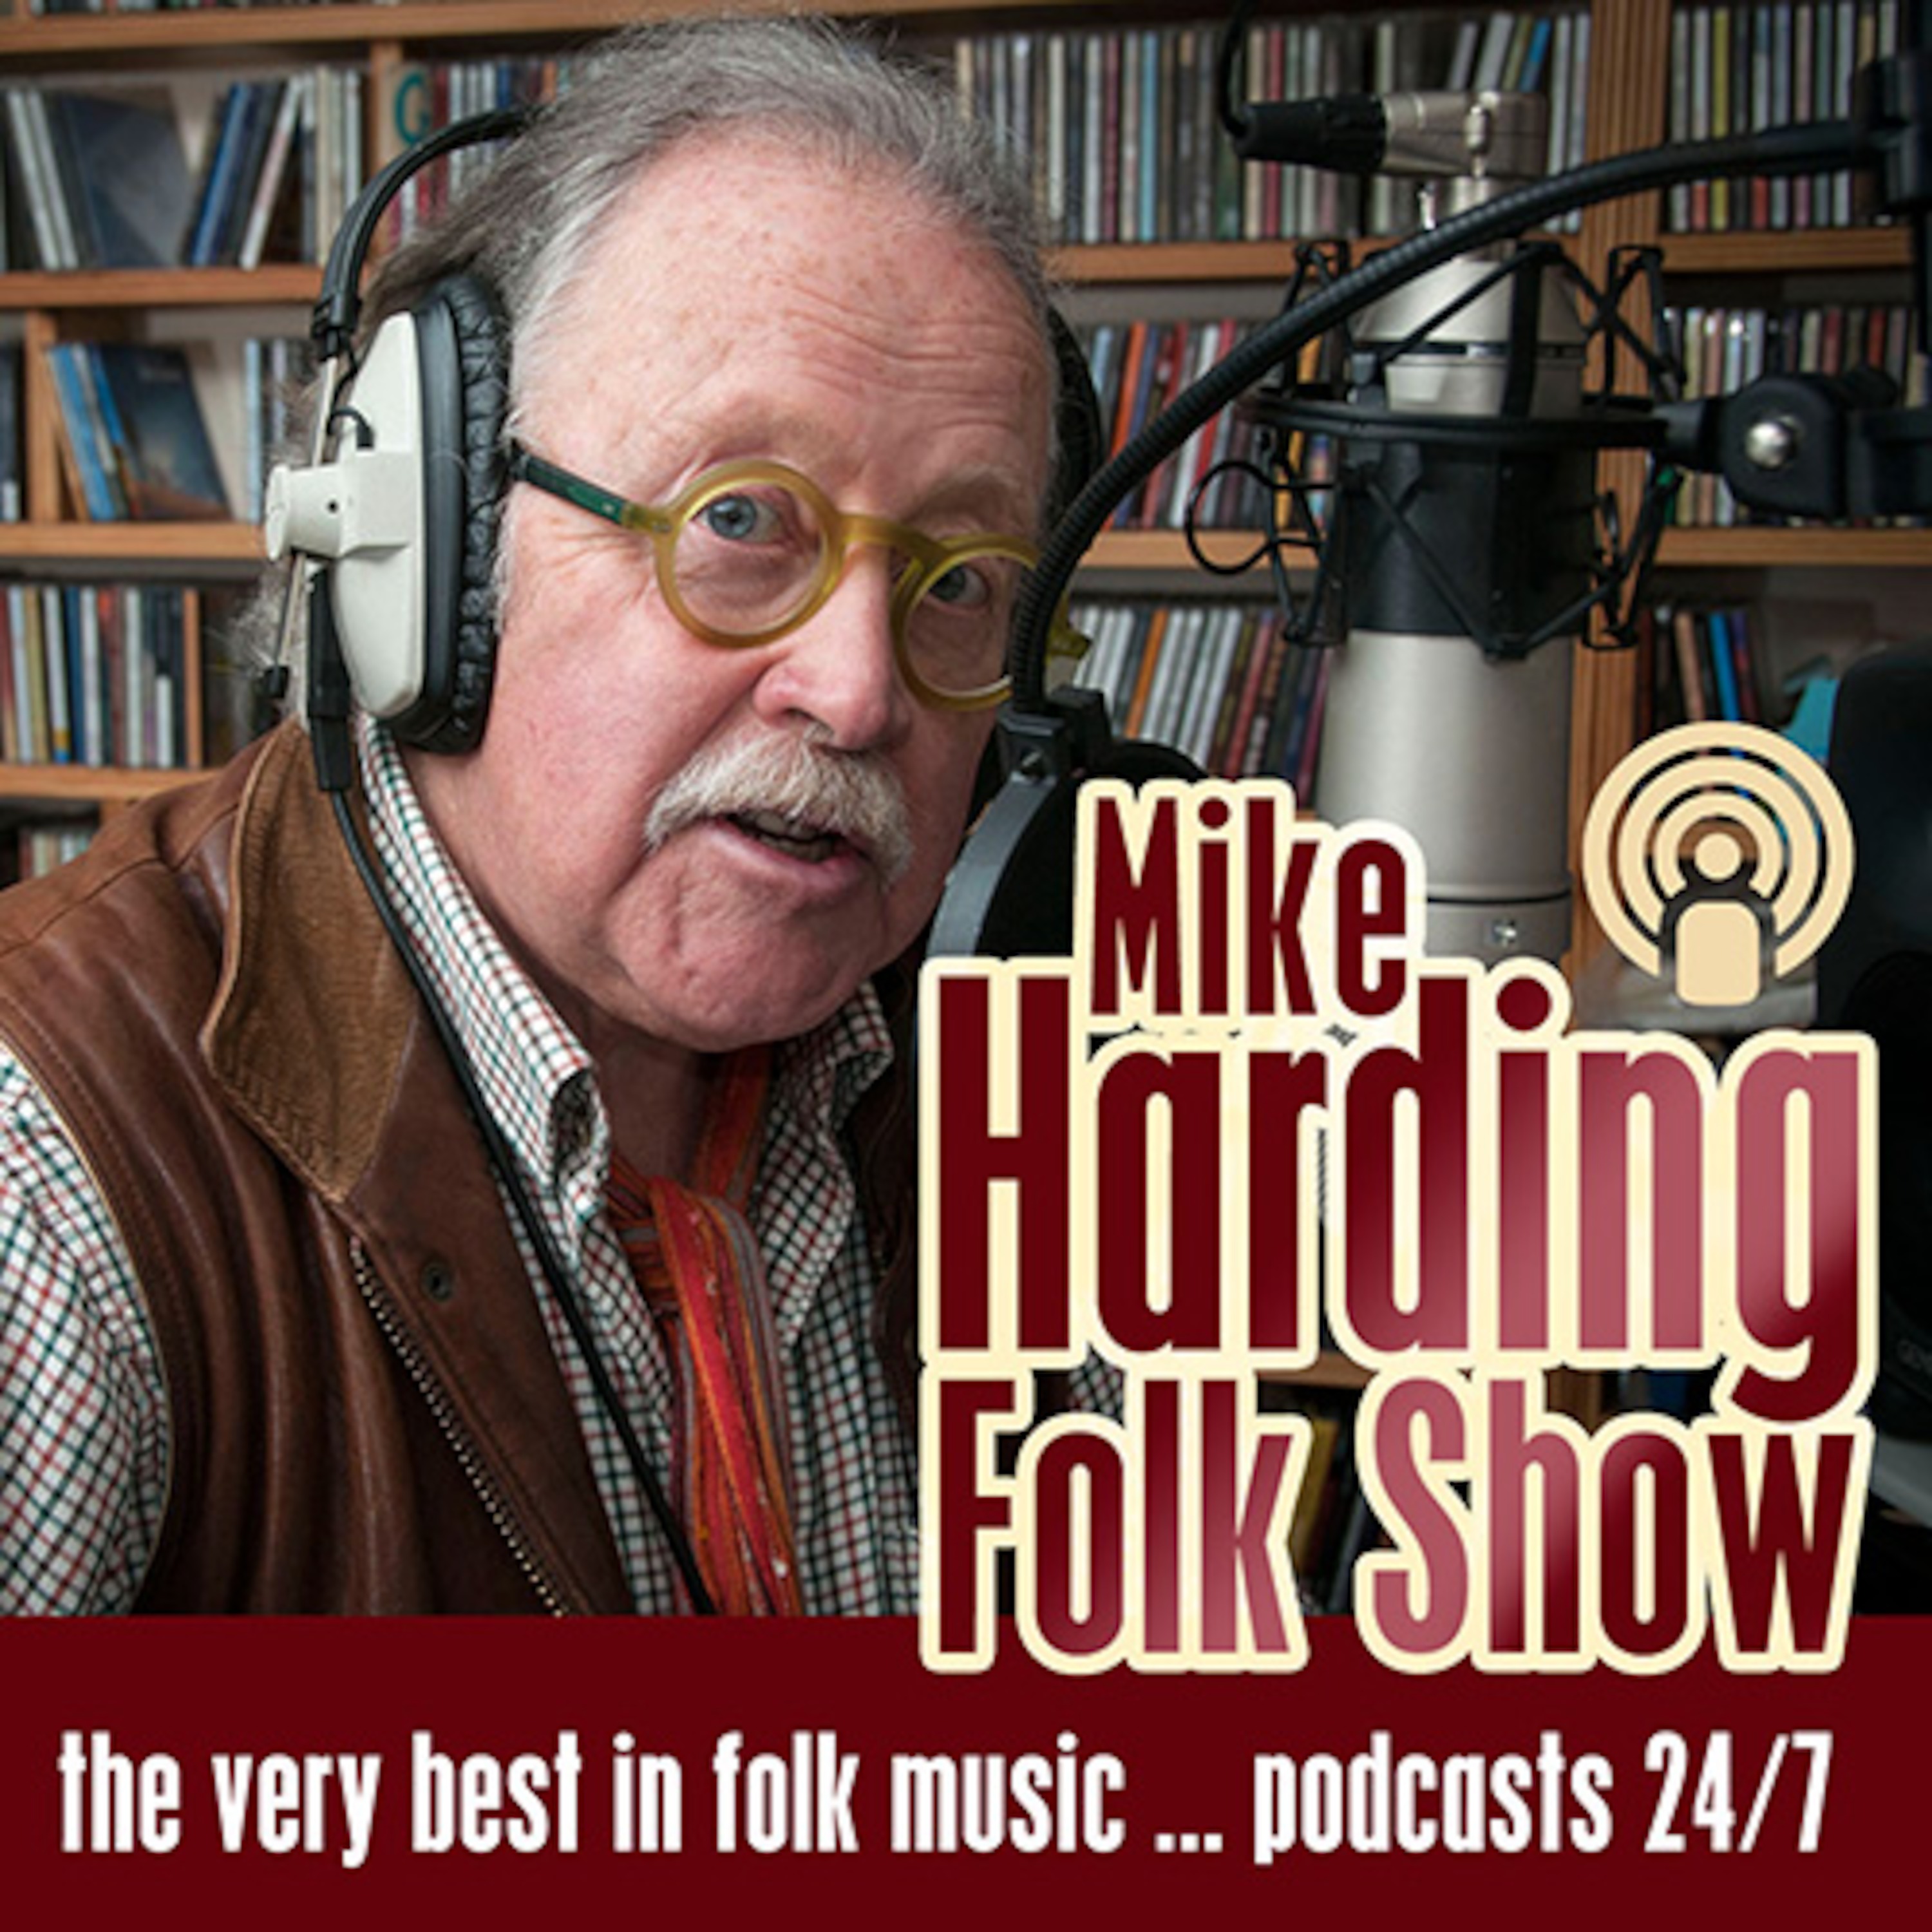 Mike Harding Folk Show 16